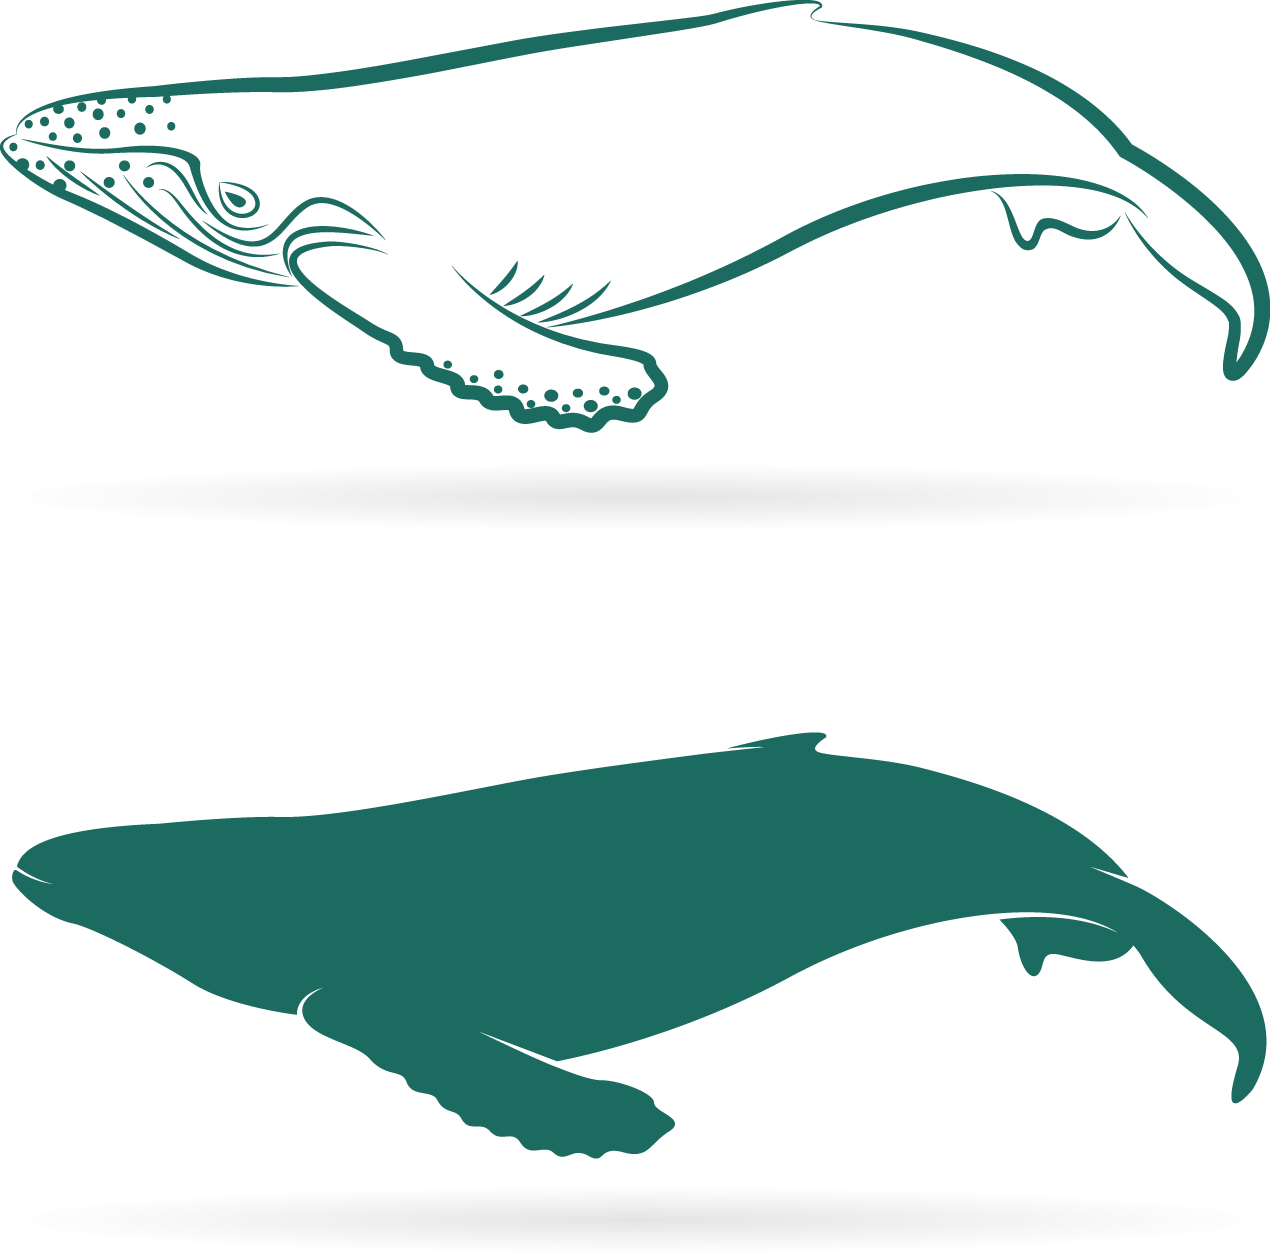 Whale Shark Comparison Graphic